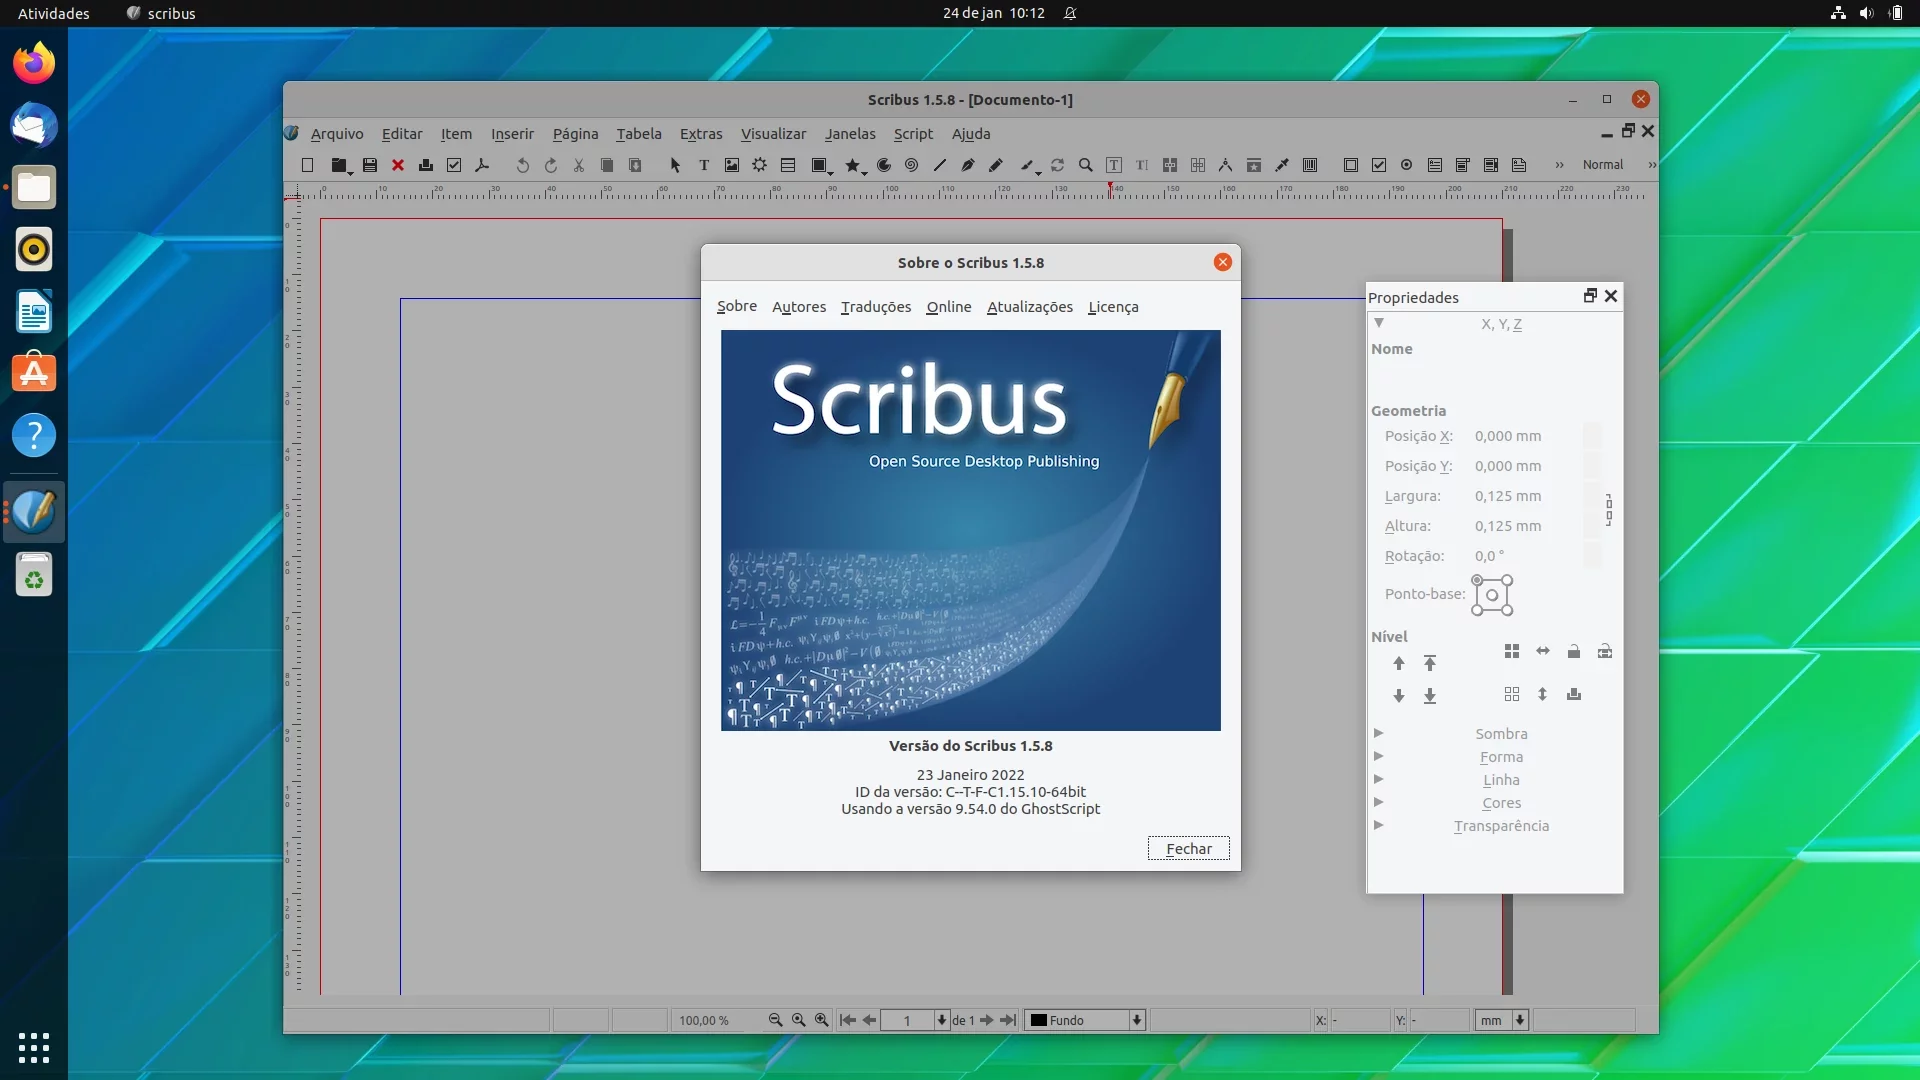 Scribus na versão 1.5.8